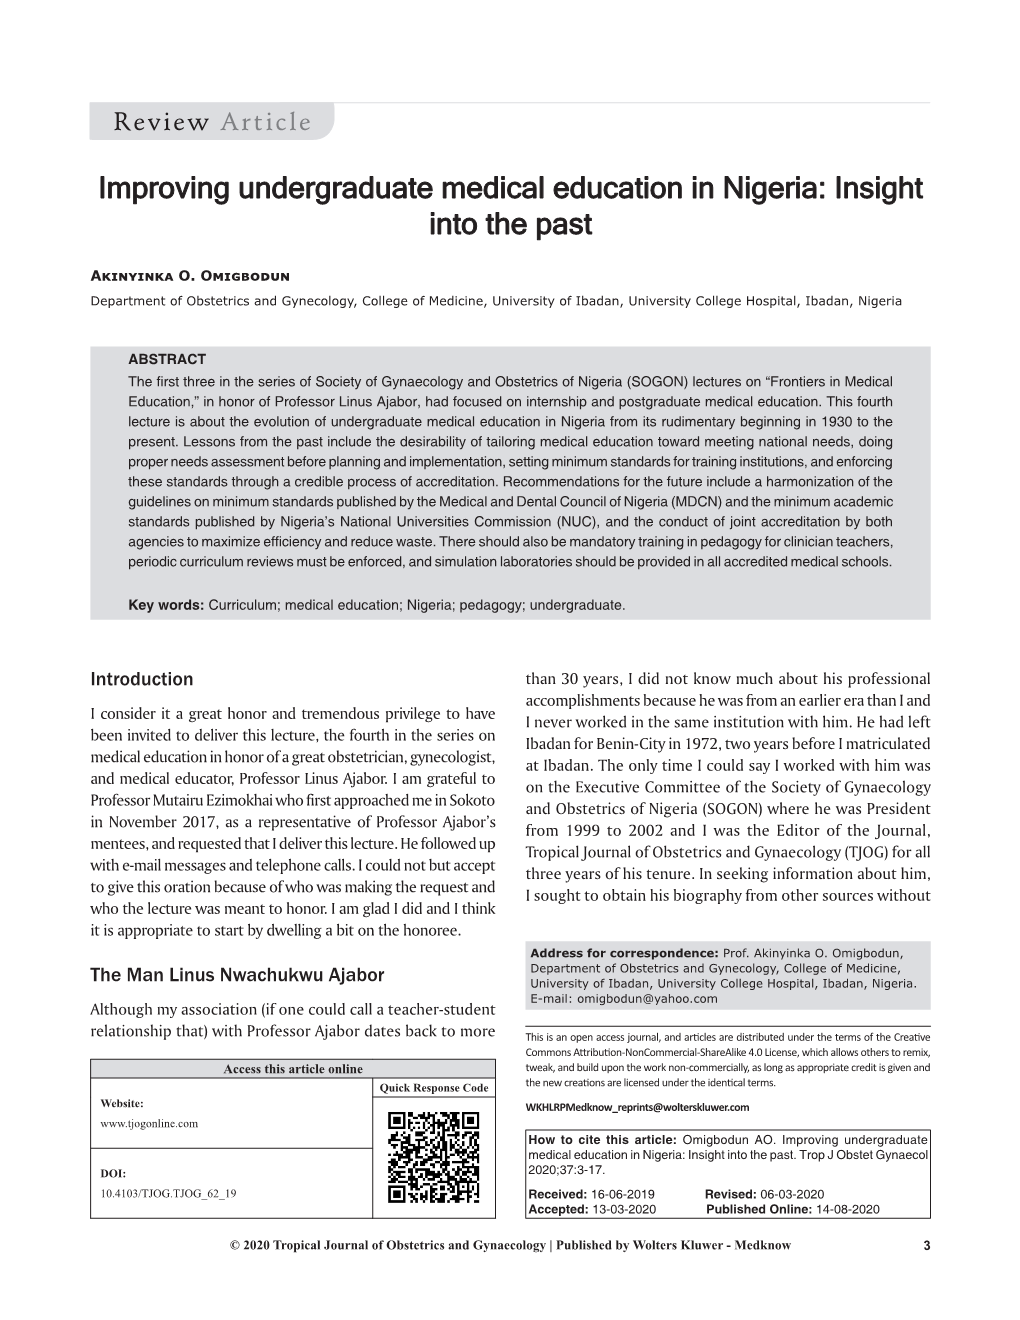 Improving Undergraduate Medical Education in Nigeria: Insight Into the Past